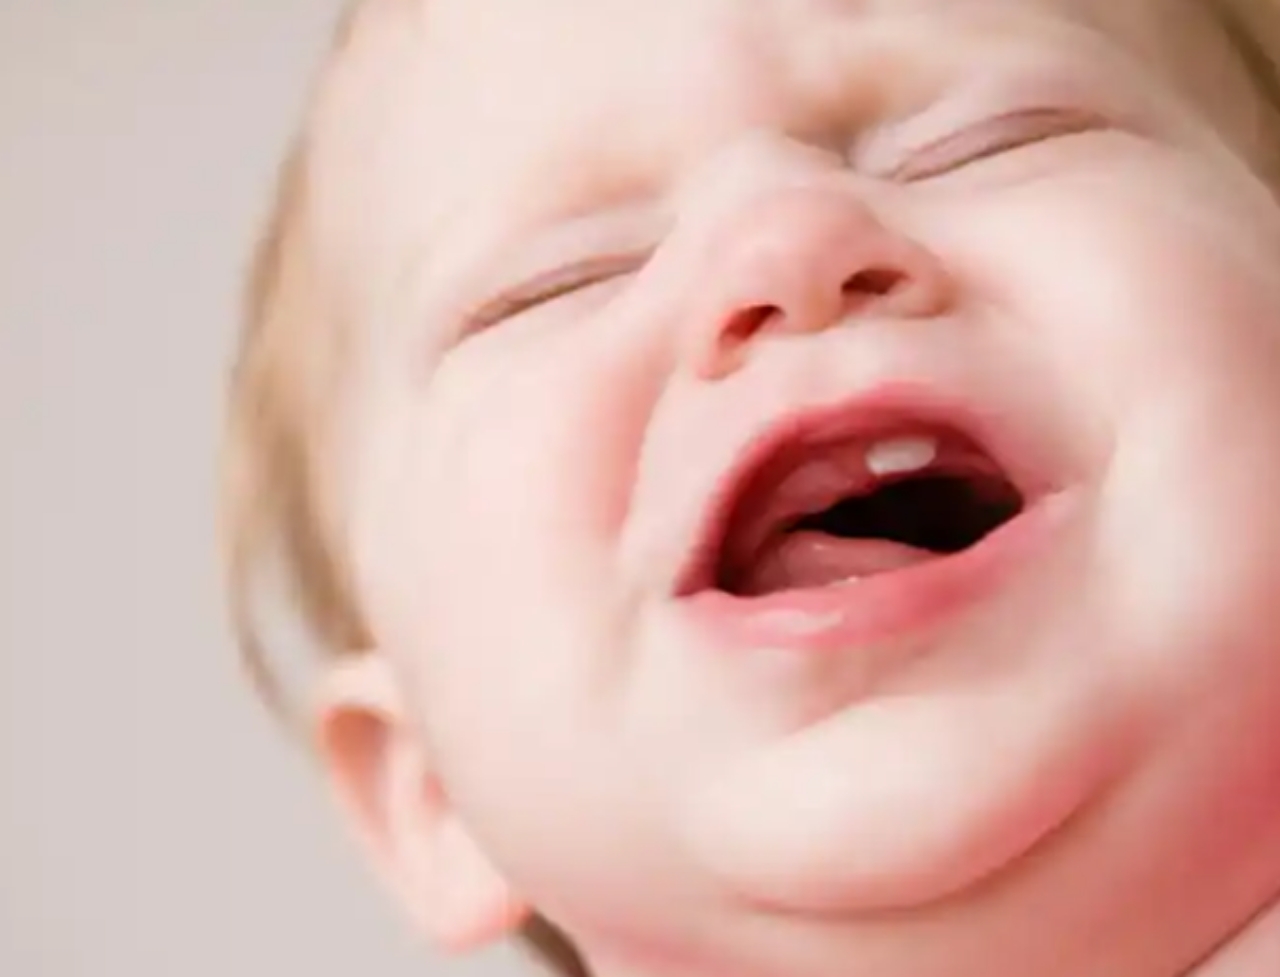 Baby Teeth: How To Relieve Teething?